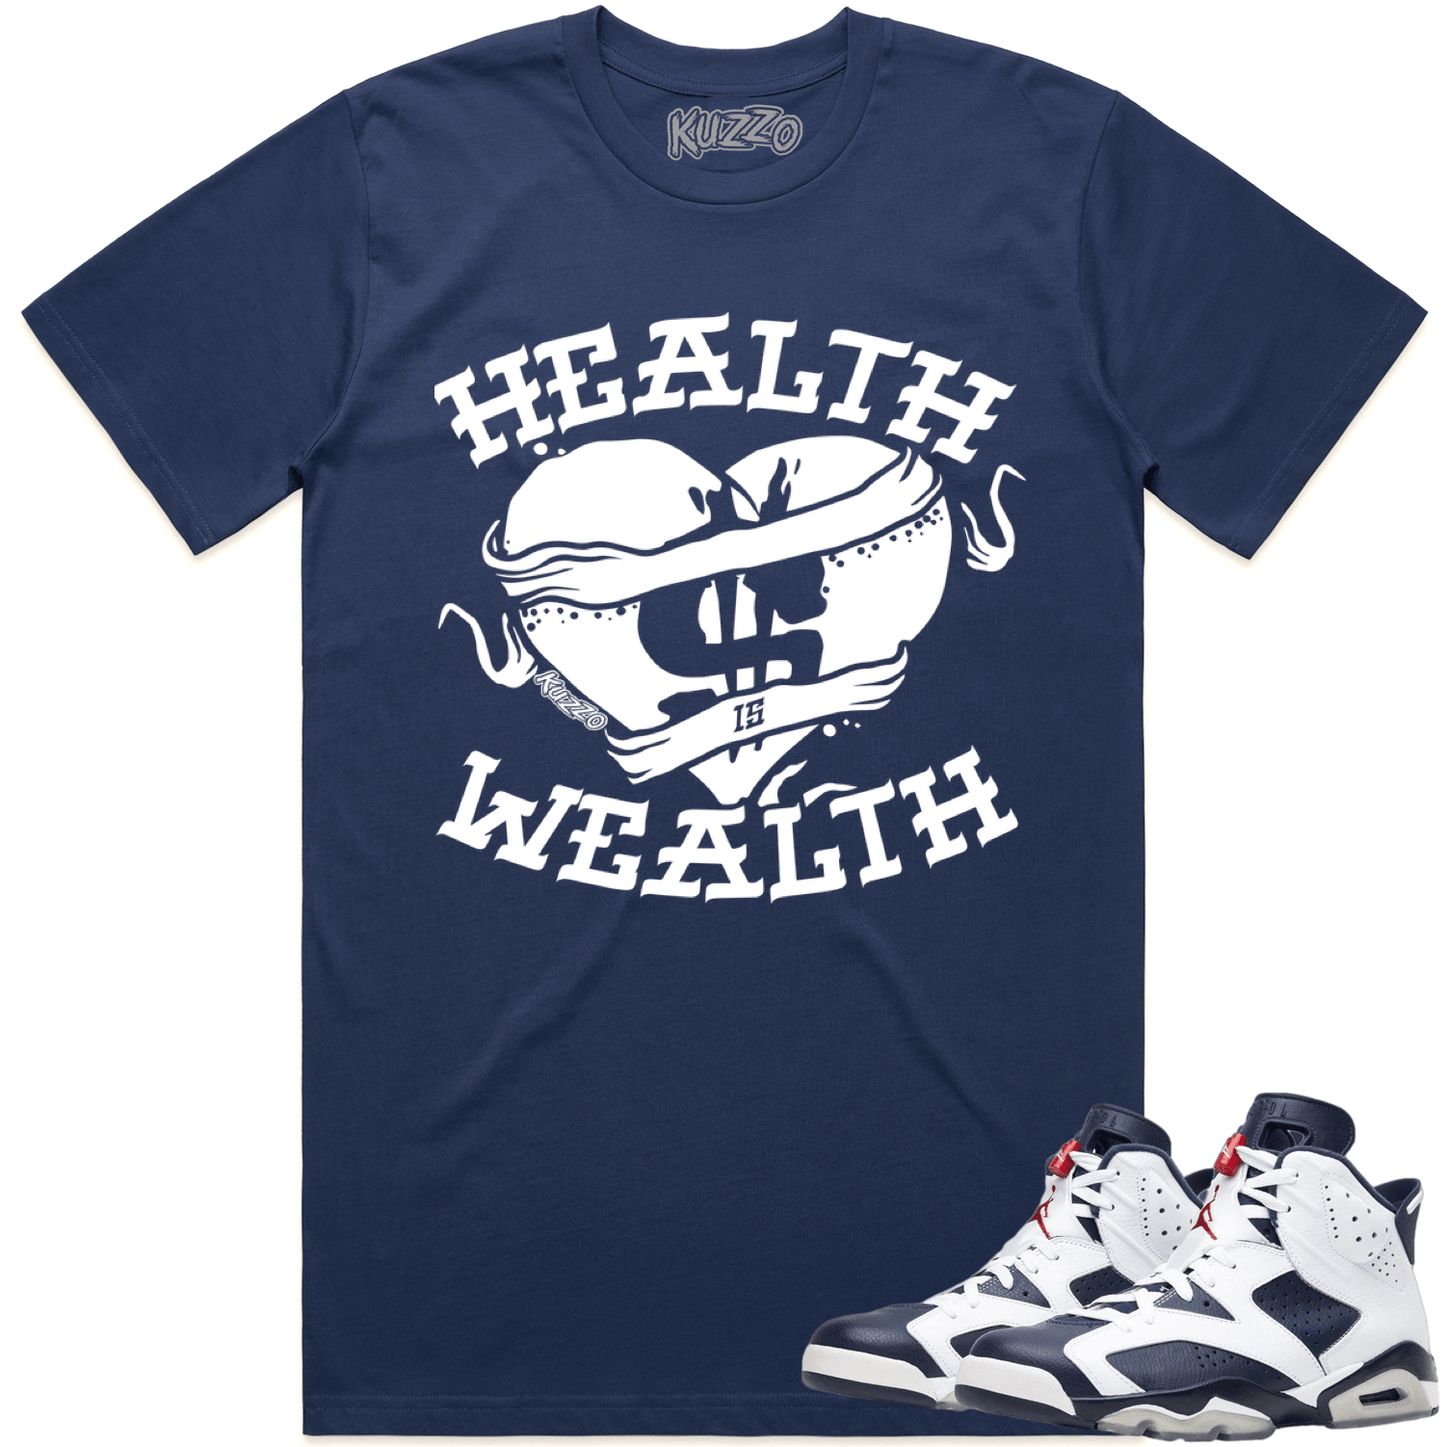 Olympic 6s Shirts - Jordan Retro 6 Olympic 6s Sneaker Tees - Health